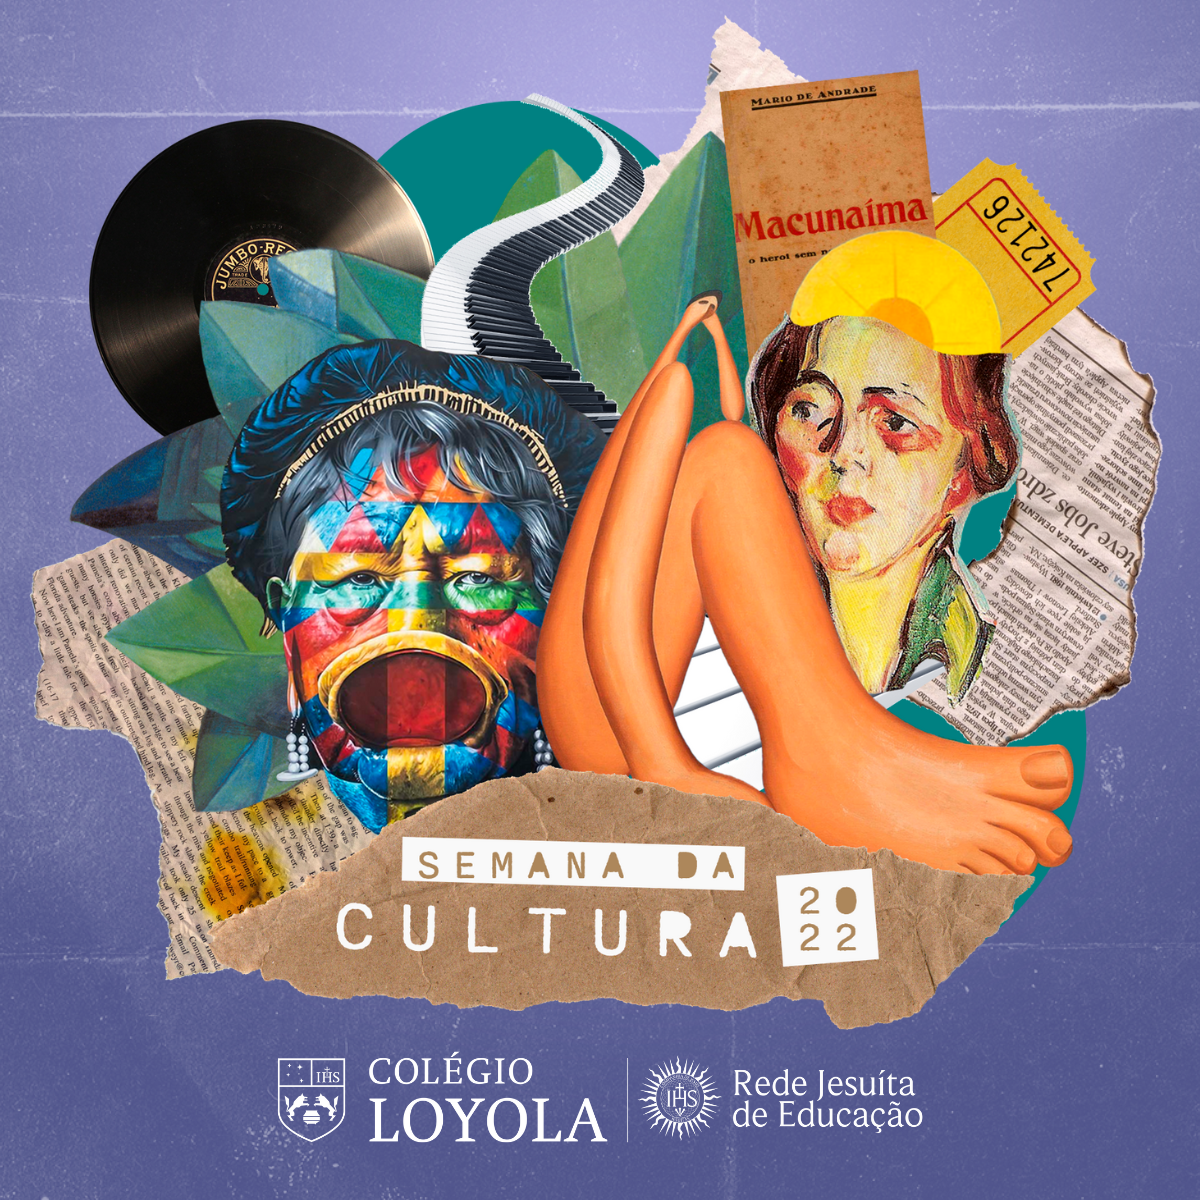 Semana da Cultura agitou o Colégio Loyola